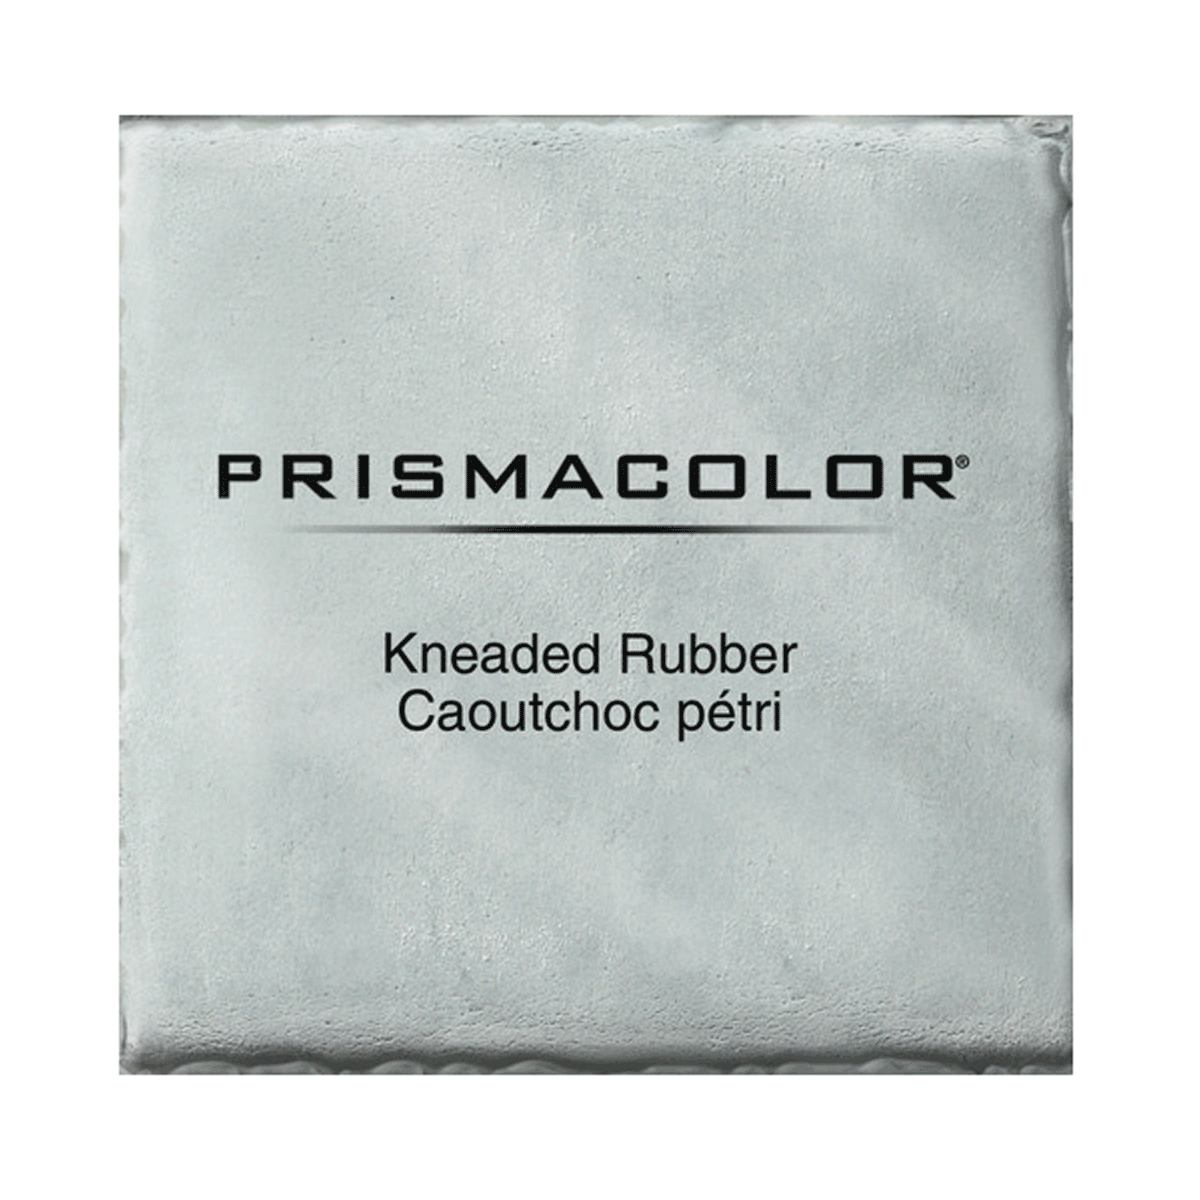 Prismacolor Kneaded Rubber Eraser - Jumbo